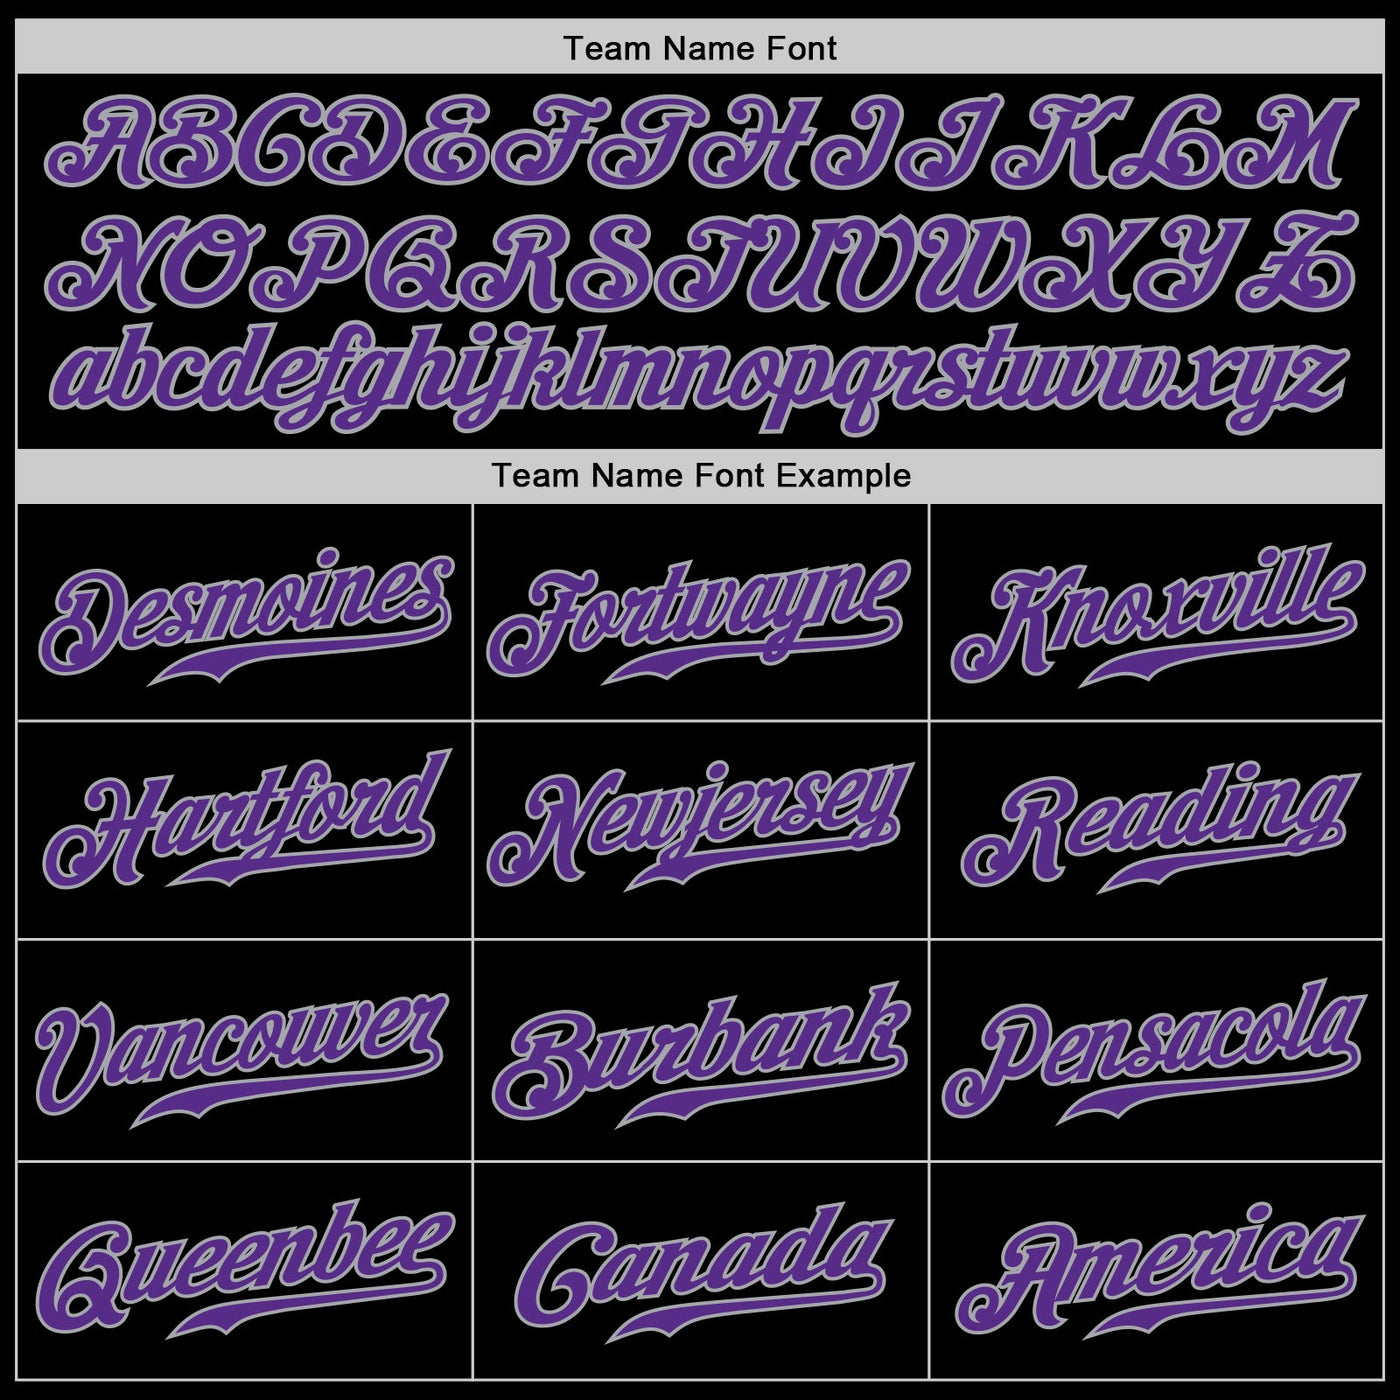 Custom Black Purple-Gray Authentic Baseball Jersey - Owls Matrix LTD